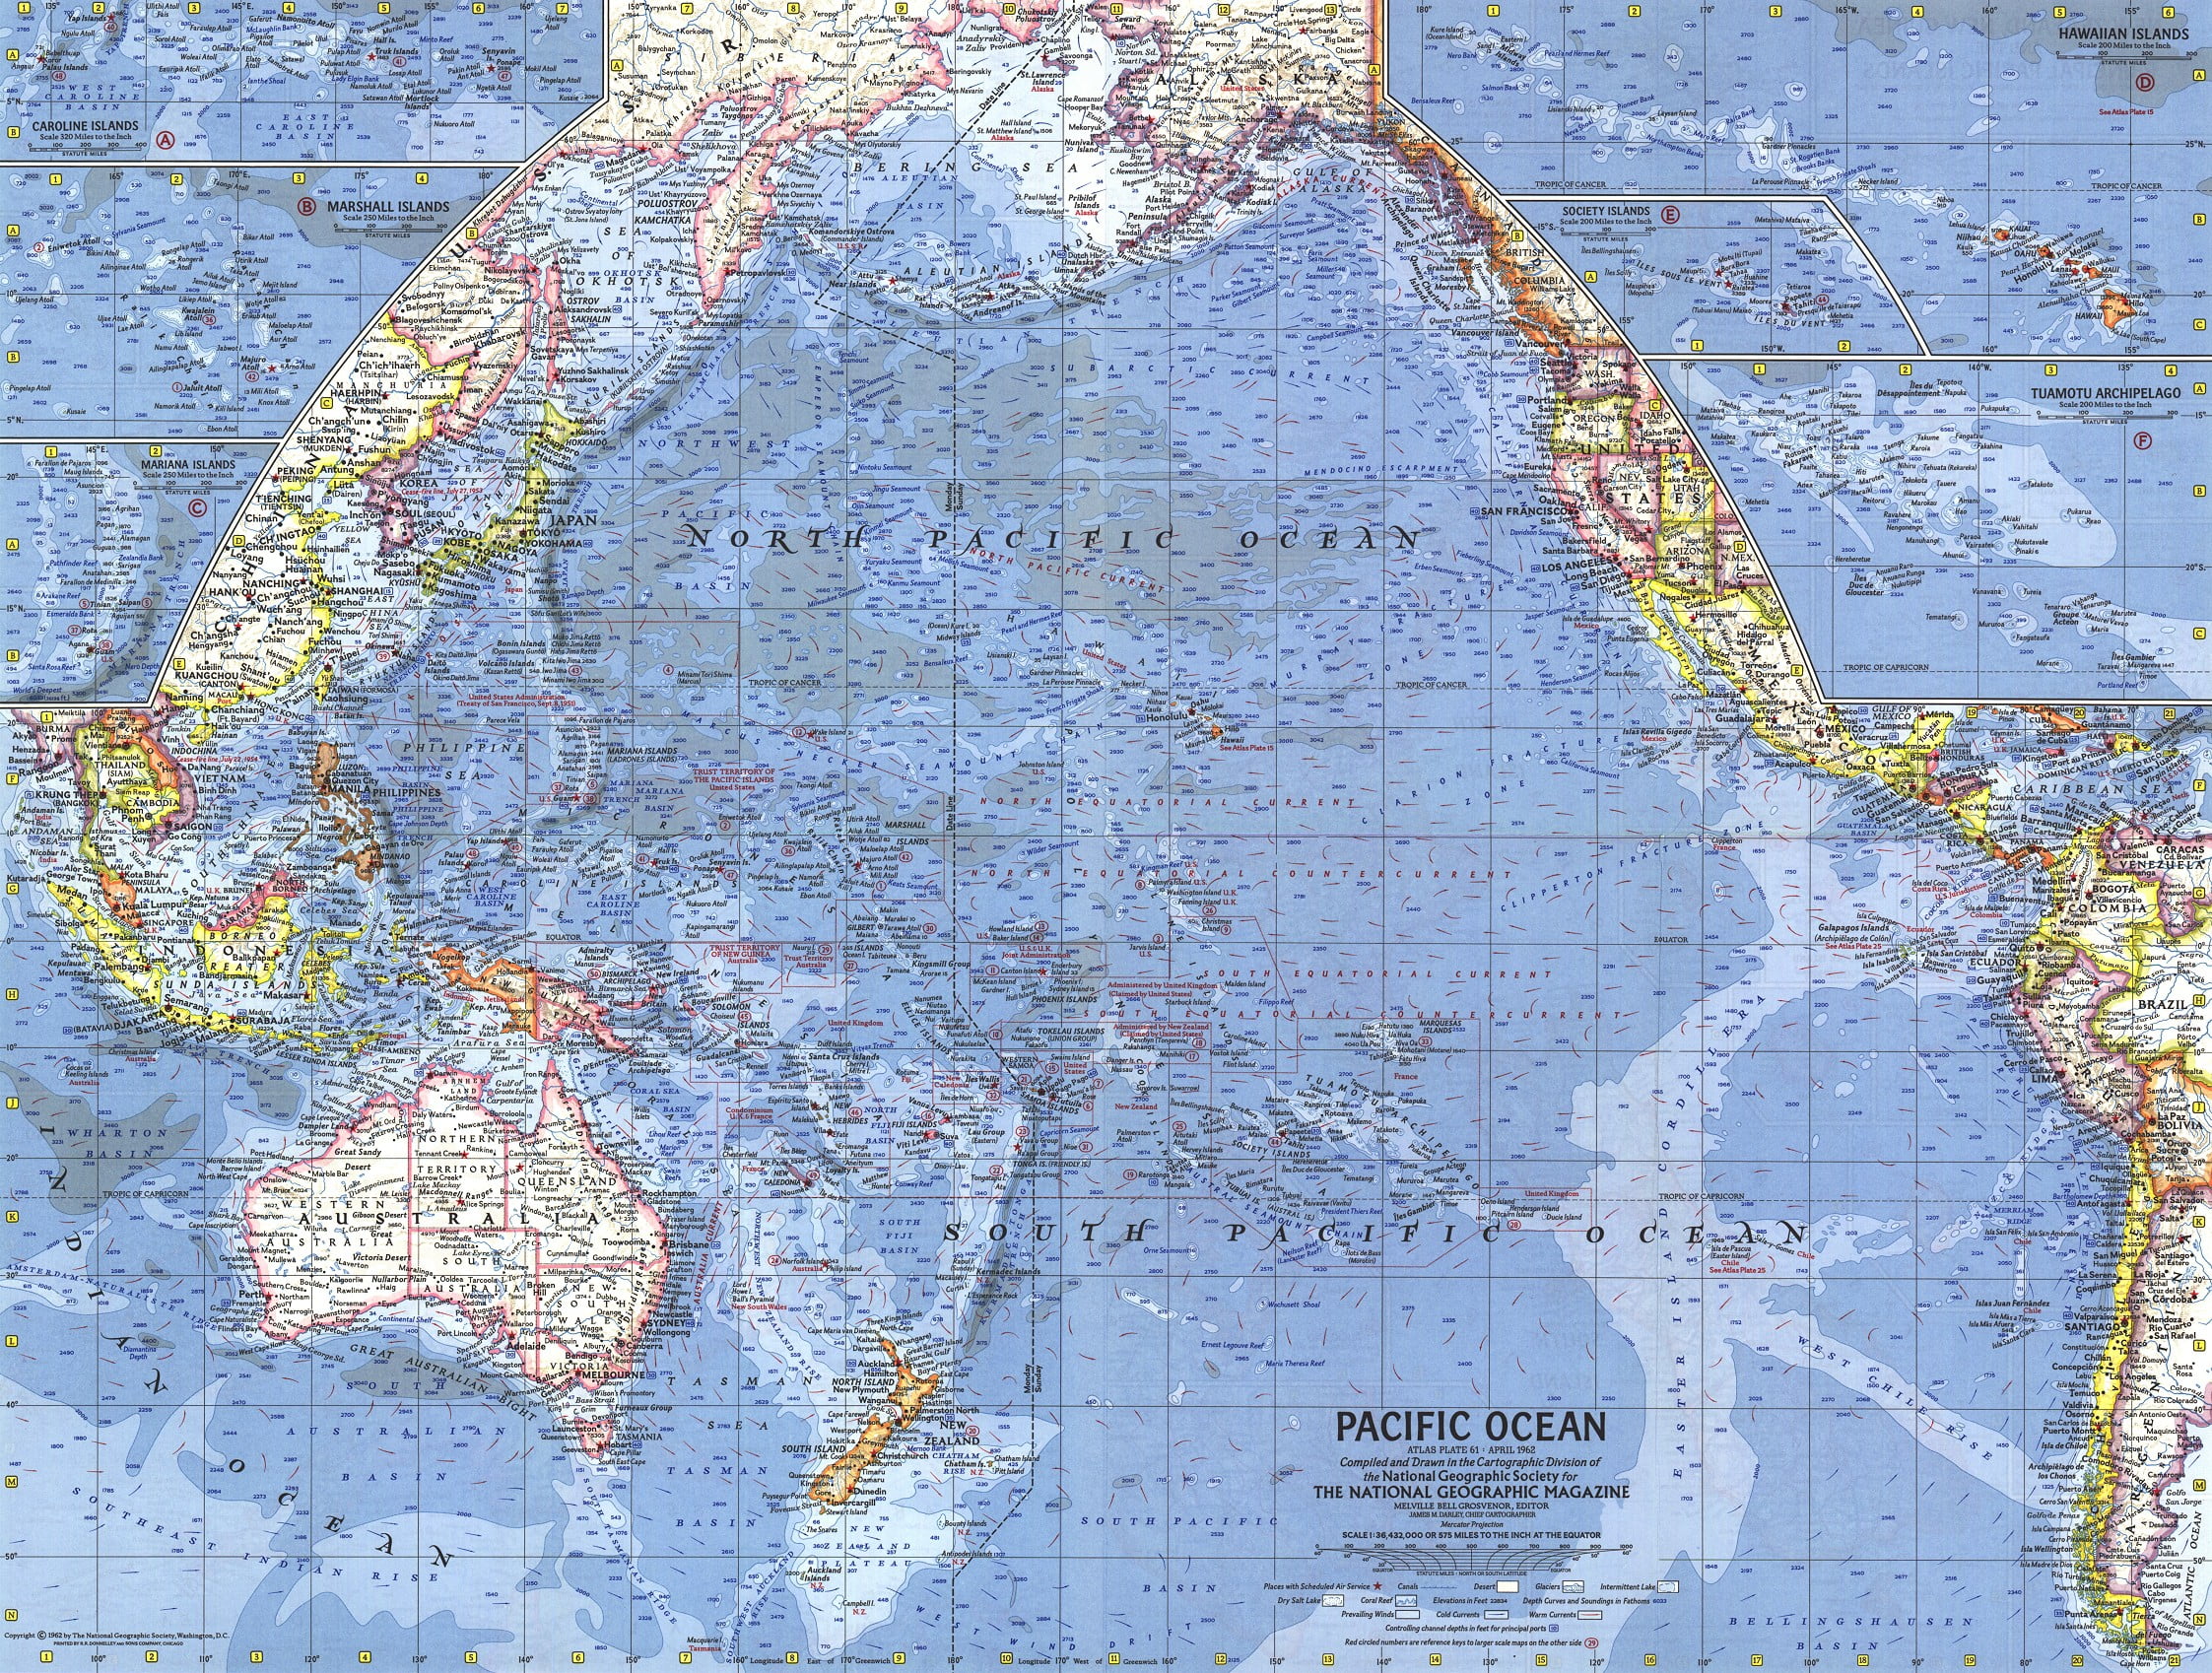 Атлас тихого океана. Физическая карта Тихого океана. Карта Тихого океана географическая. Тихий океан карта подробная. Тихий океан физическая карта подробная.